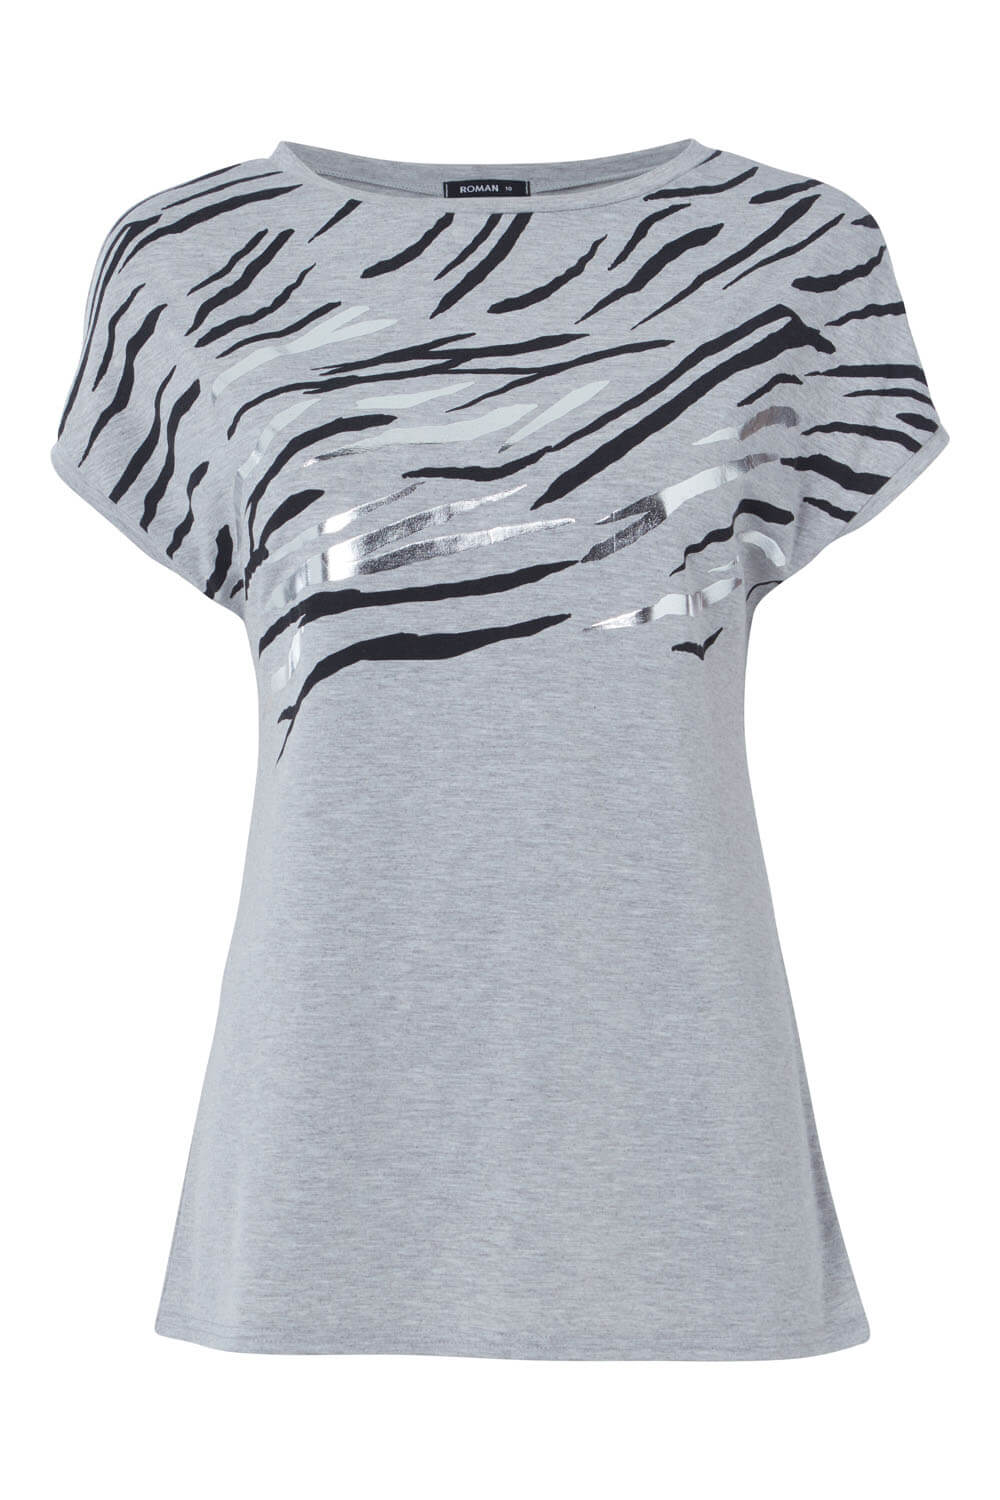 Grey Foil Zebra Print T-Shirt, Image 5 of 7